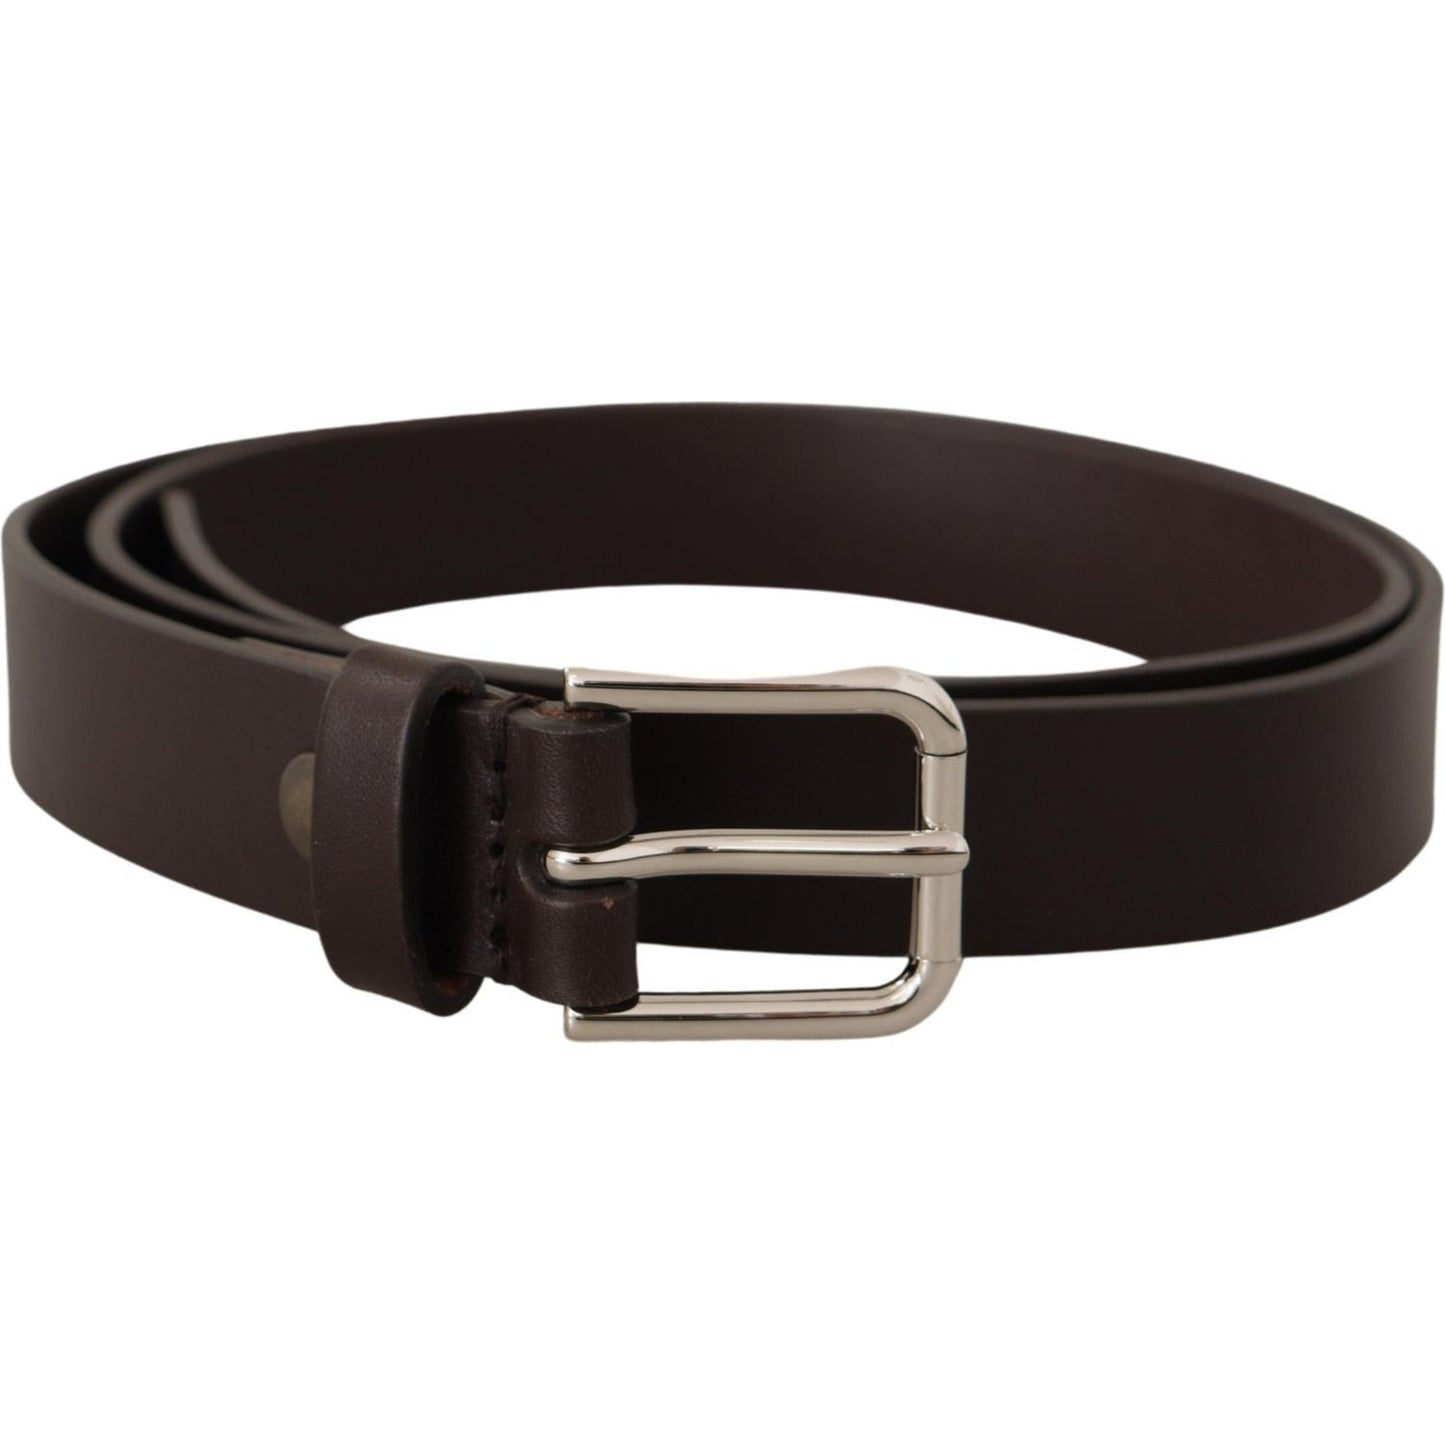 Elegant Leather Belt With Logo Buckle